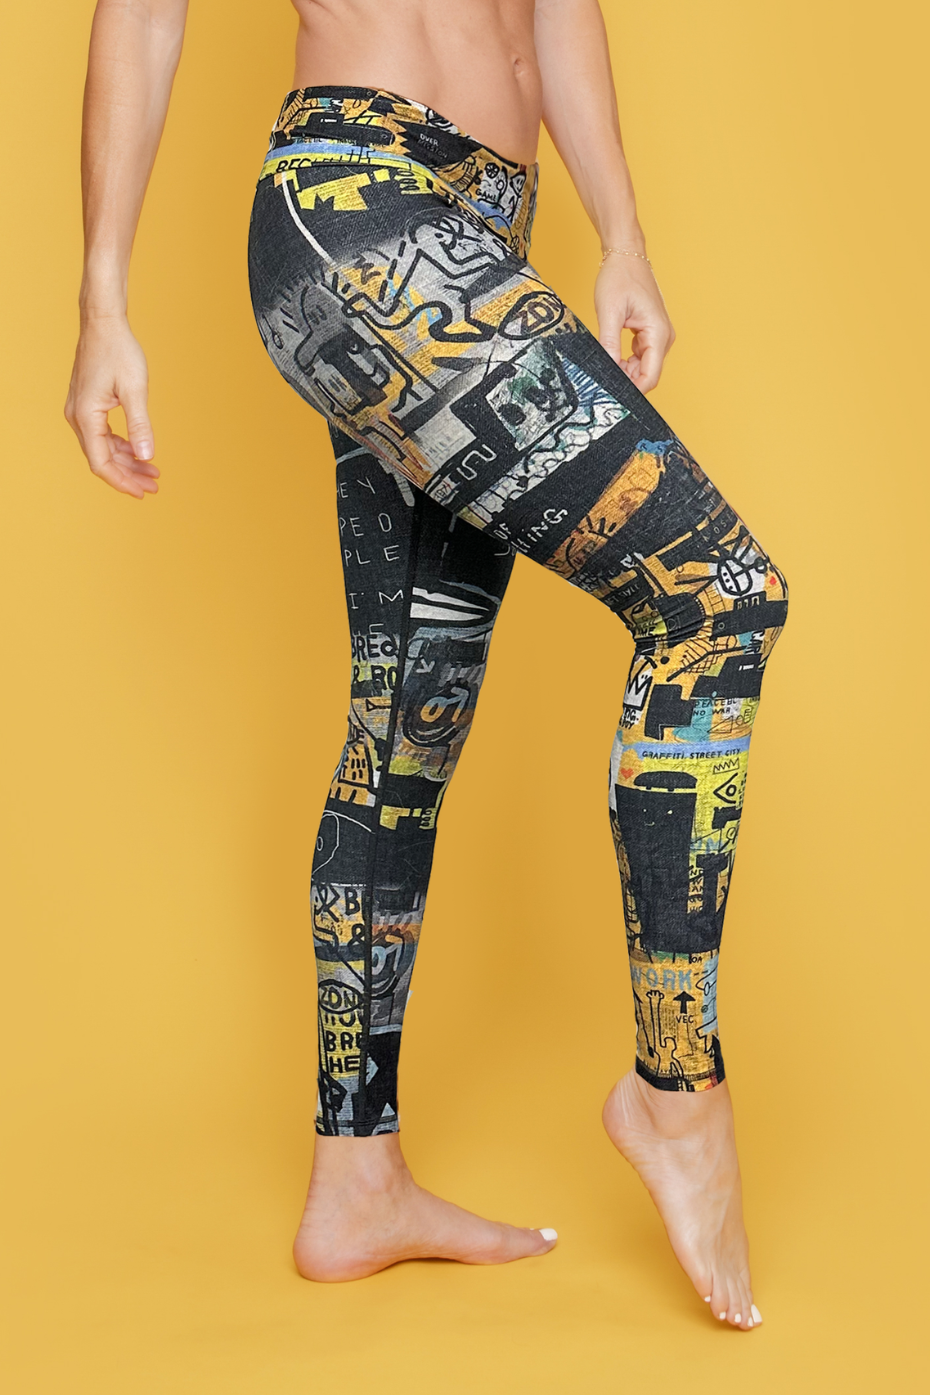 Blue and Gold Women's Leggings - Designer Leggings With Lots of